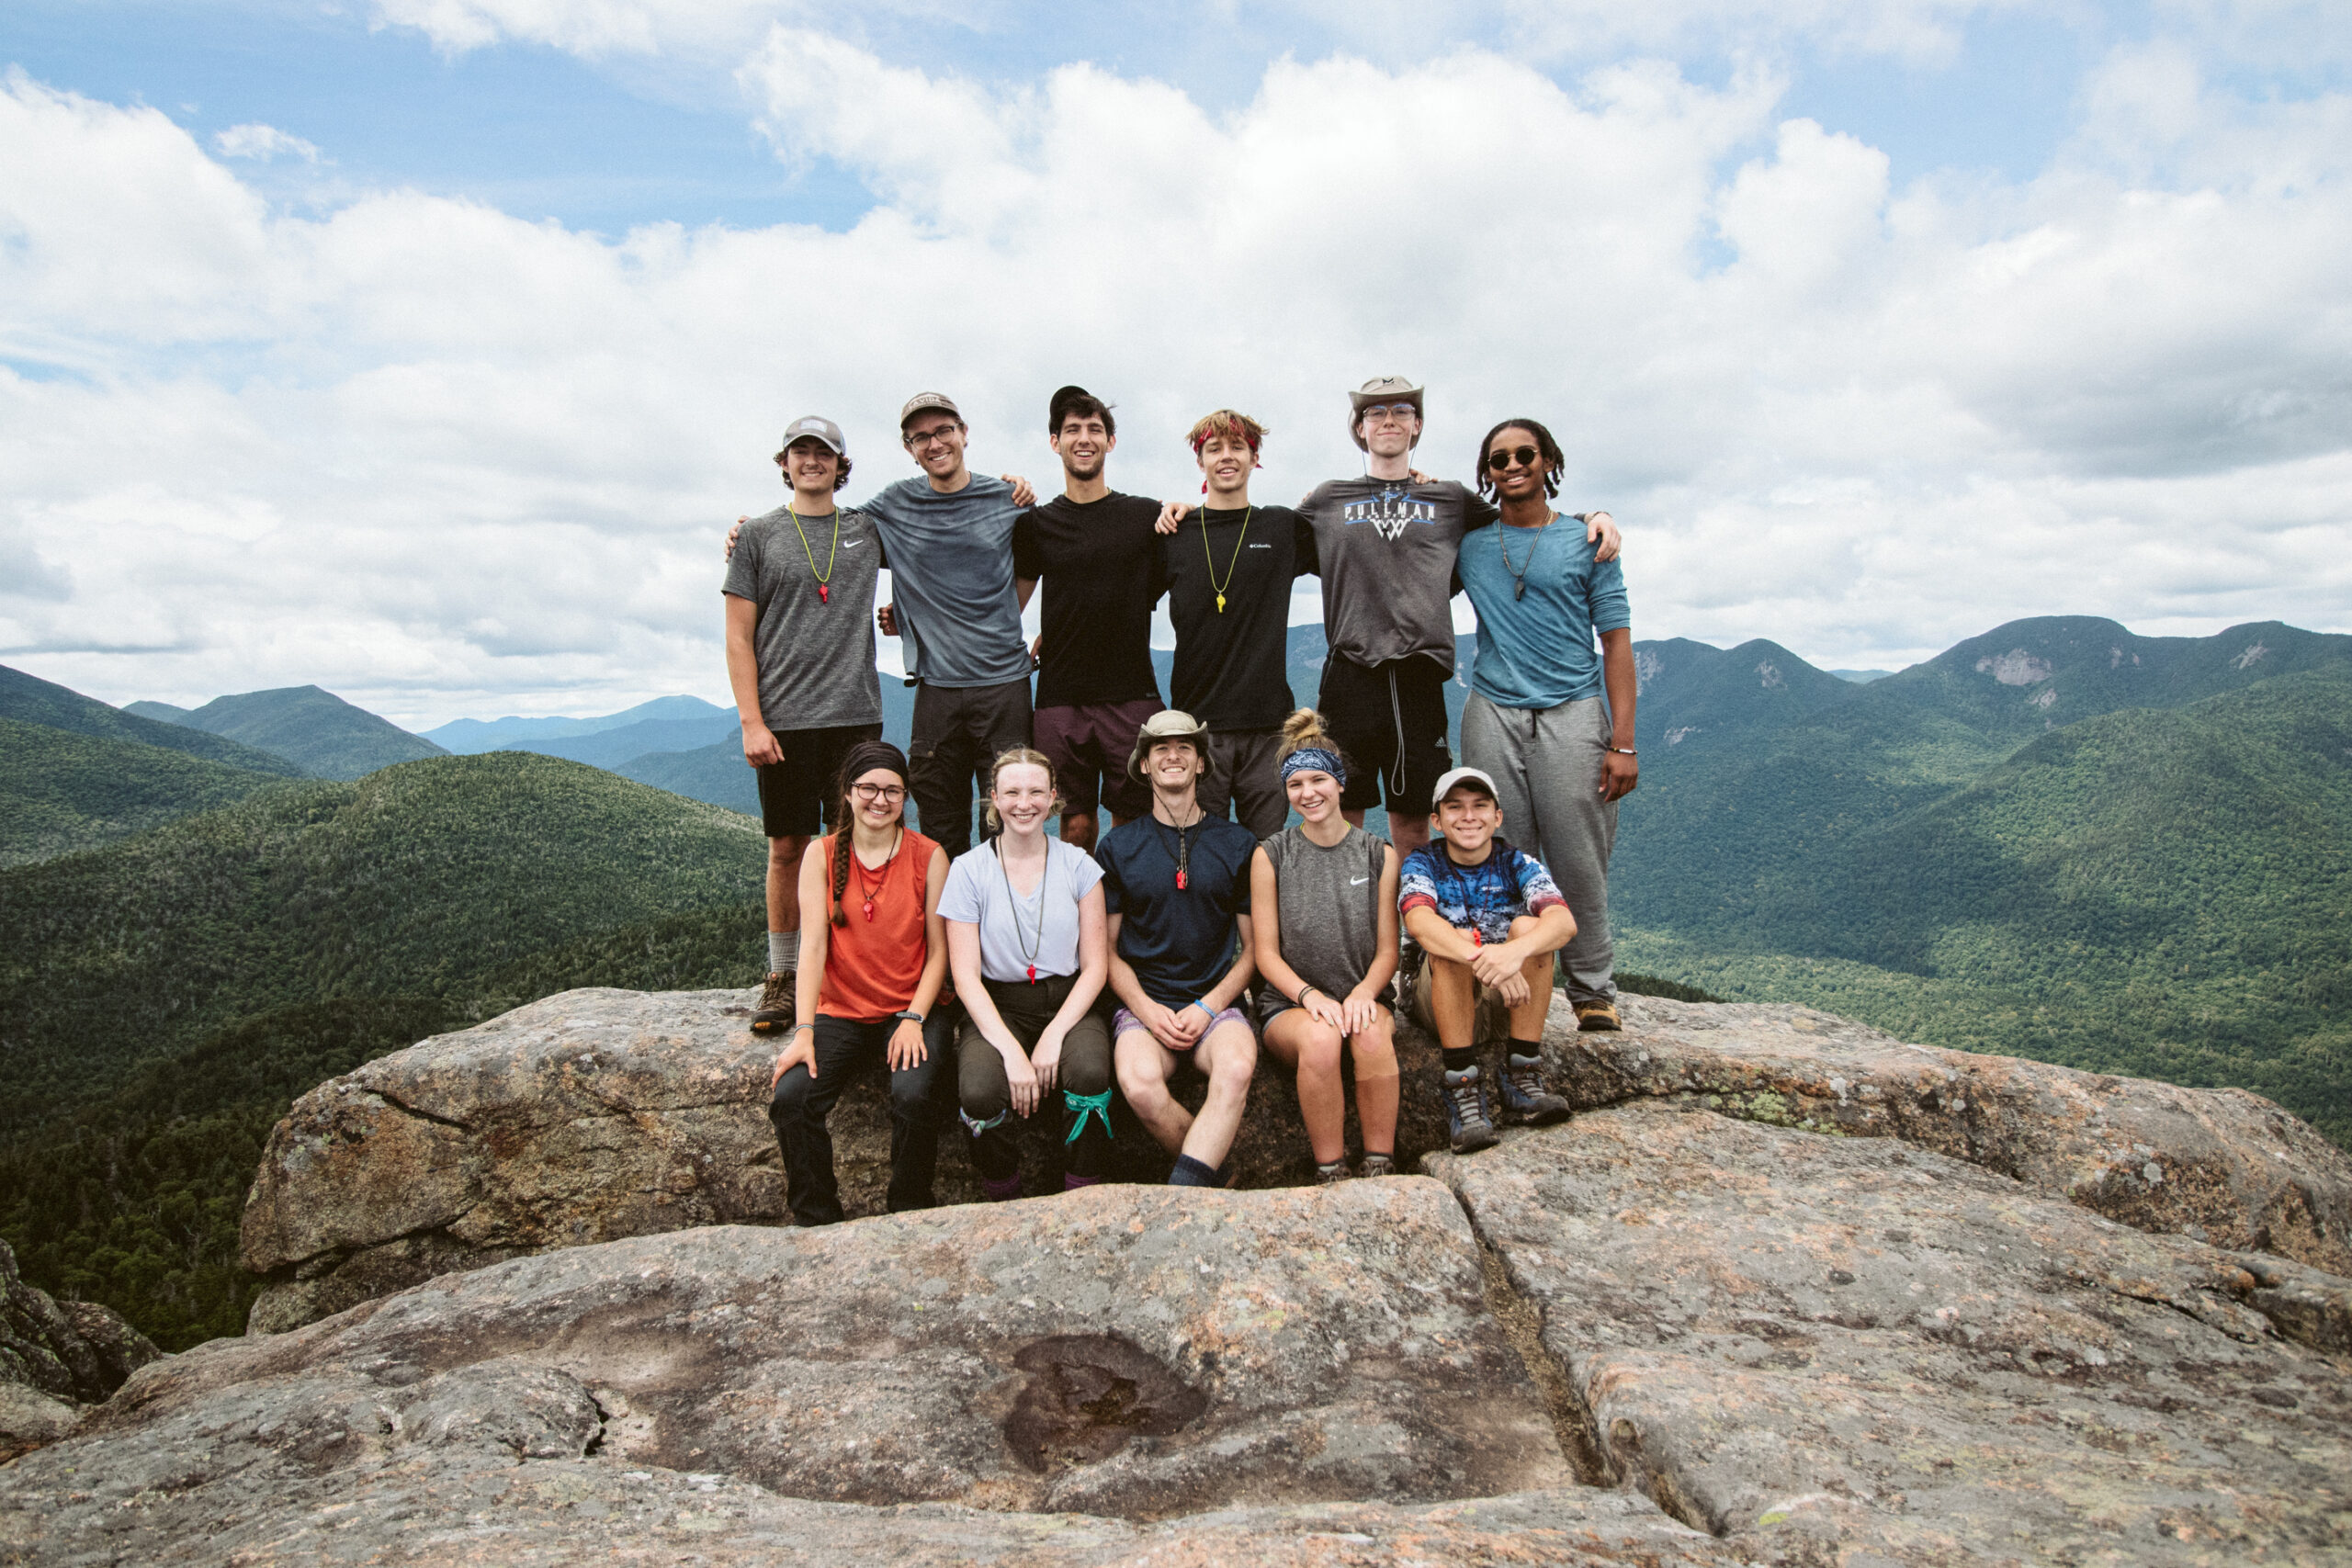 La Vida group on top of a mountain in the Adirondacks. 